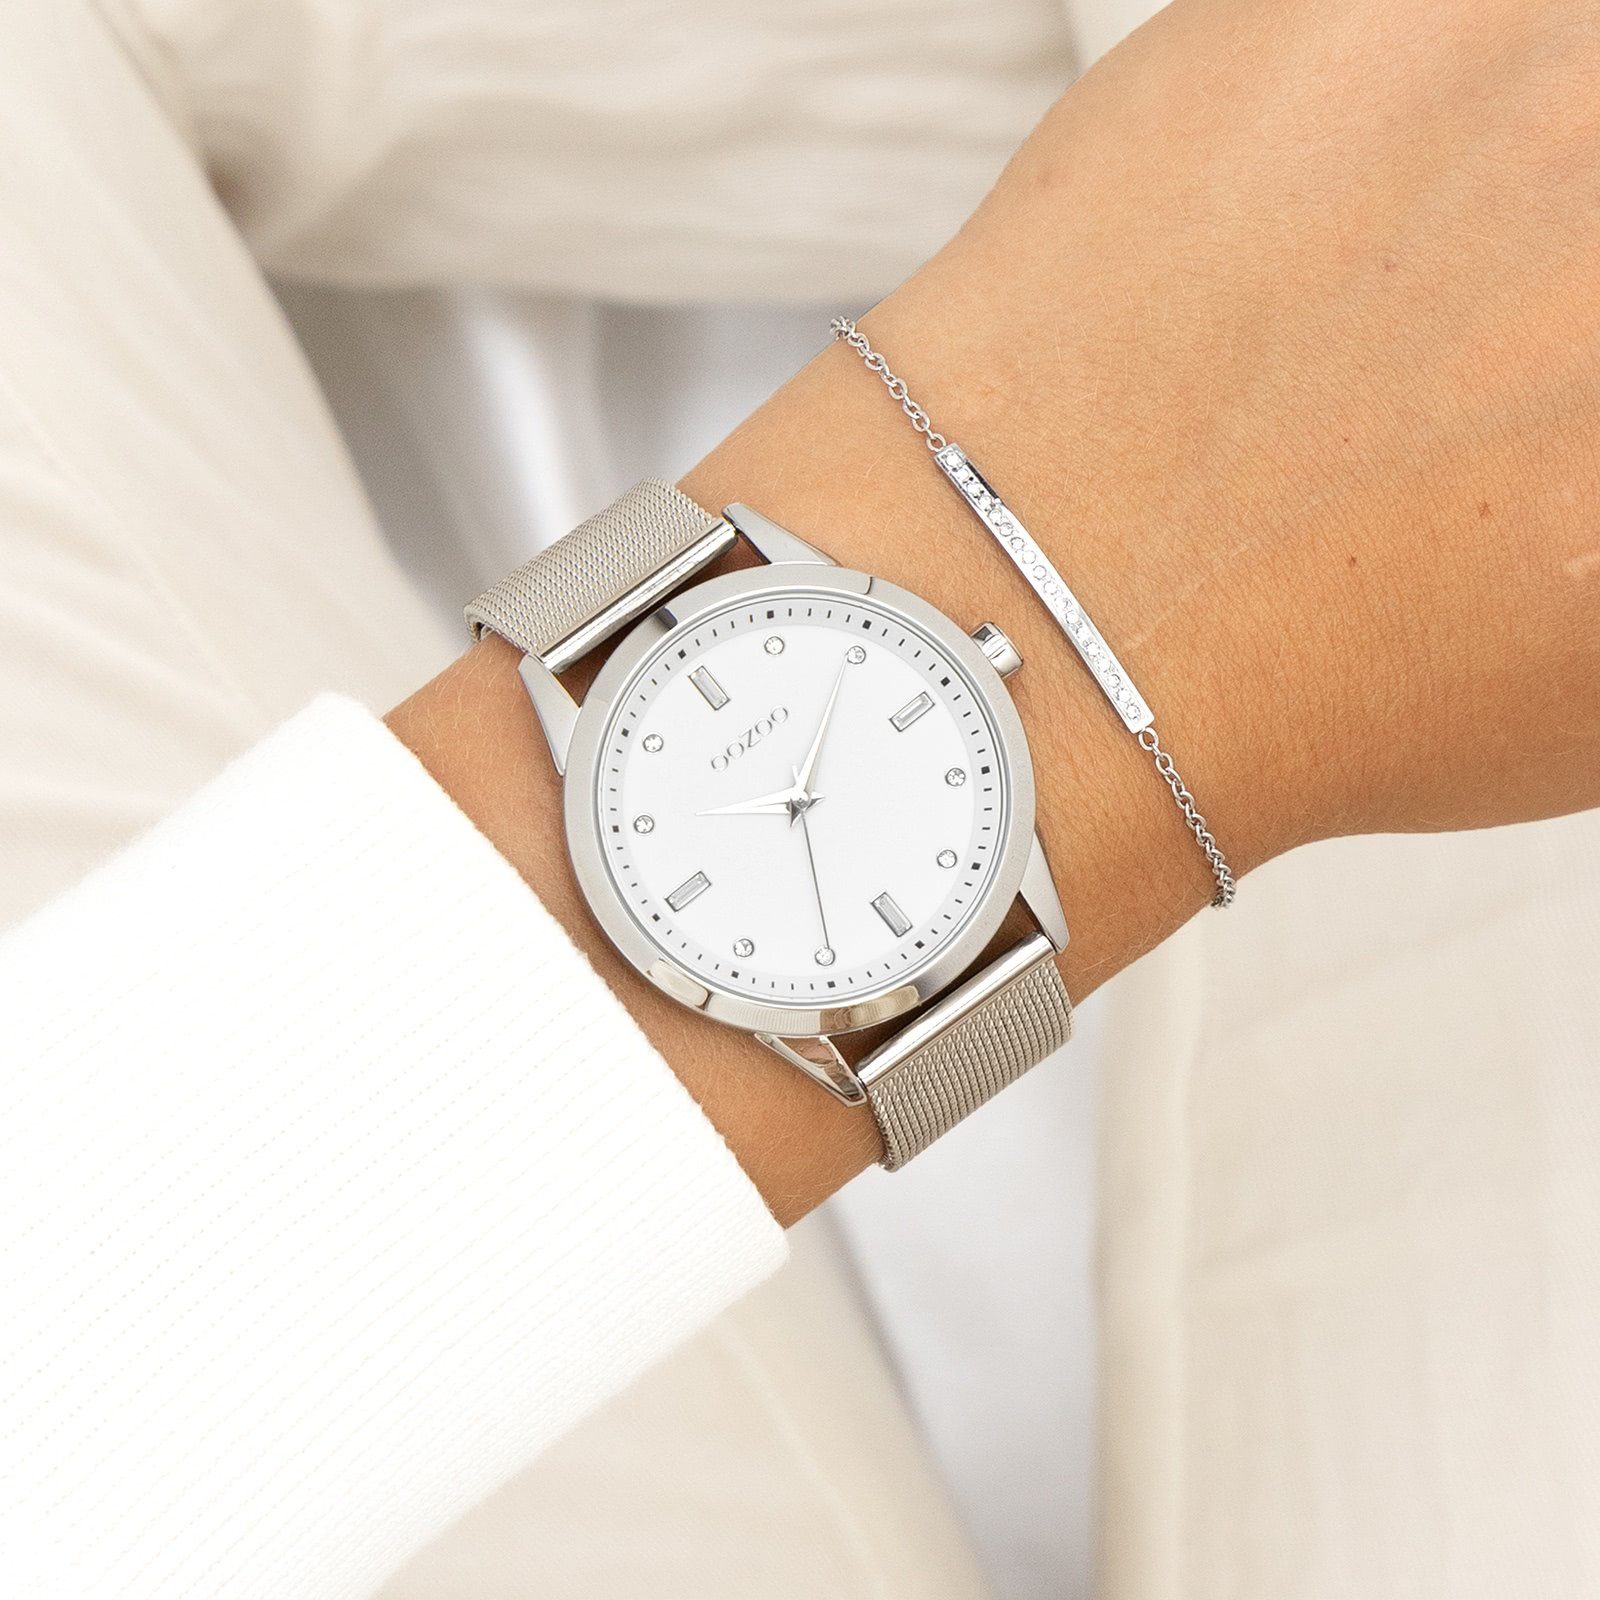 OOZOO Quarzuhr Metallarmband, Damenuhr (ca. Damen Fashion-Style 40mm) rund, groß Analog, Oozoo Armbanduhr Timepieces